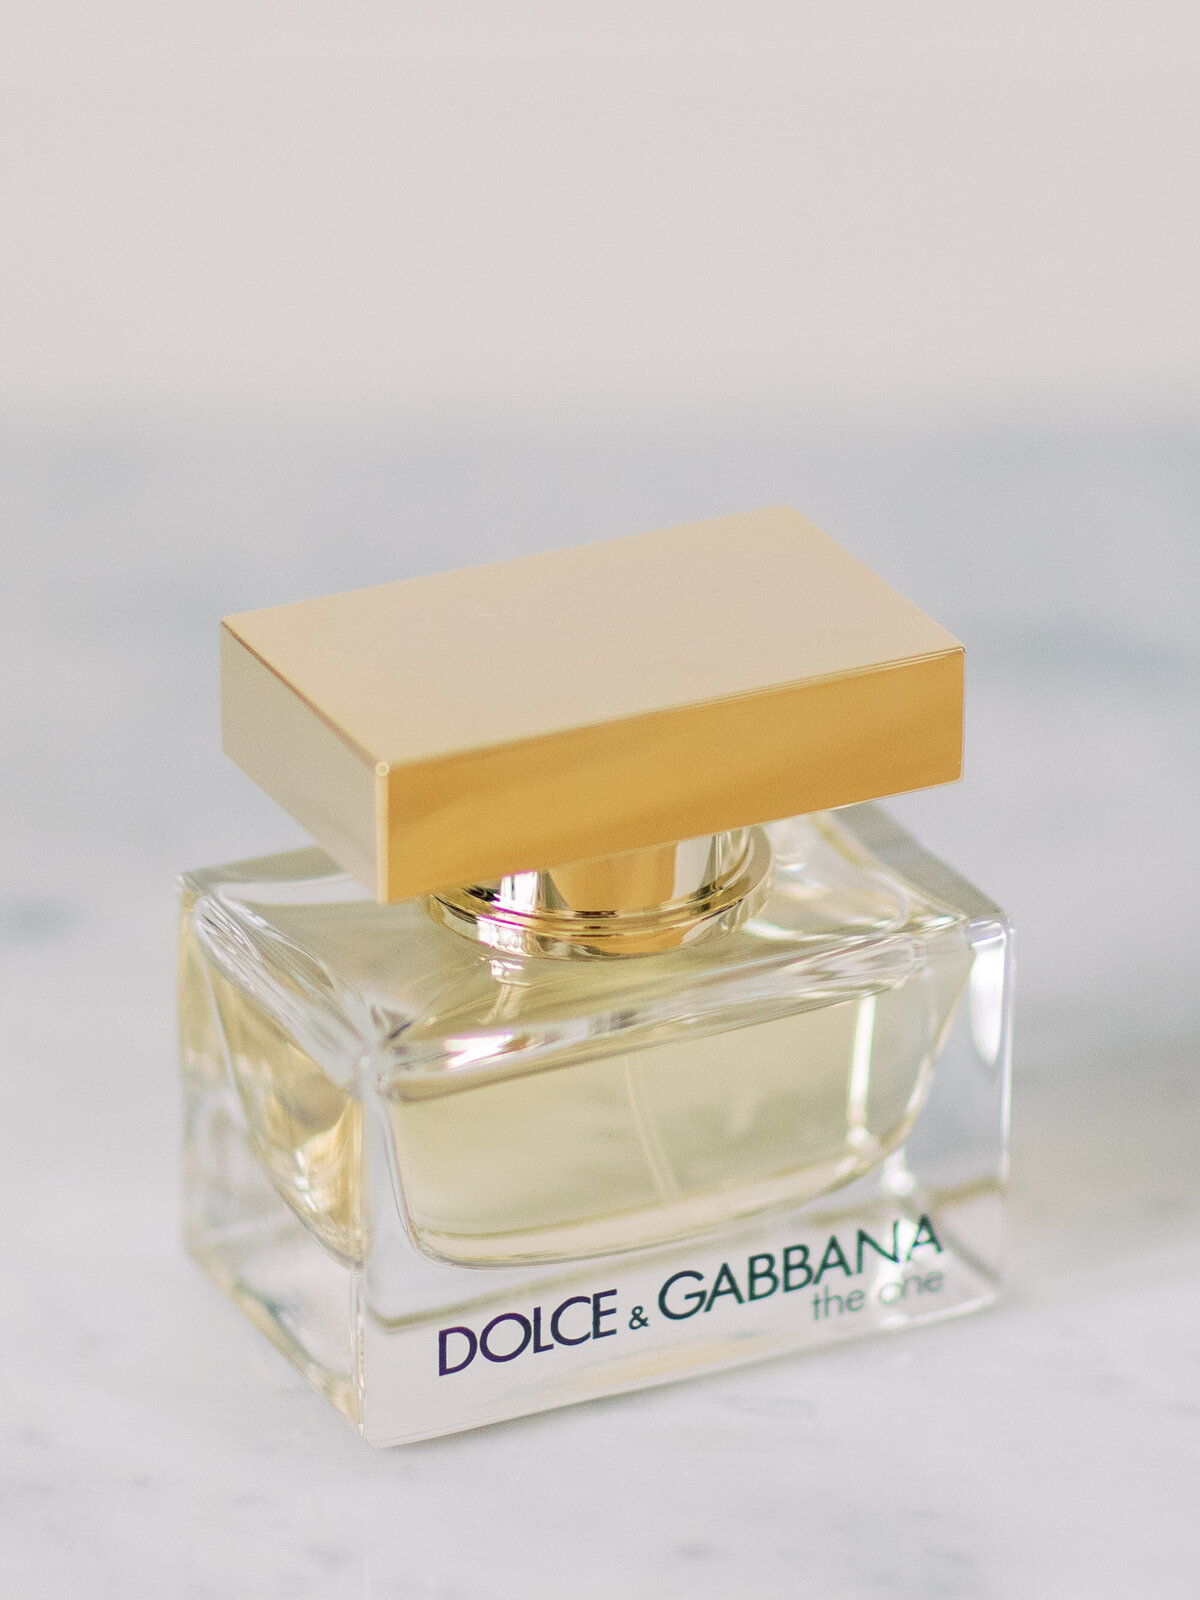 Dolce-Gabbana-The-One-notinobe-olivia-poncelet-2